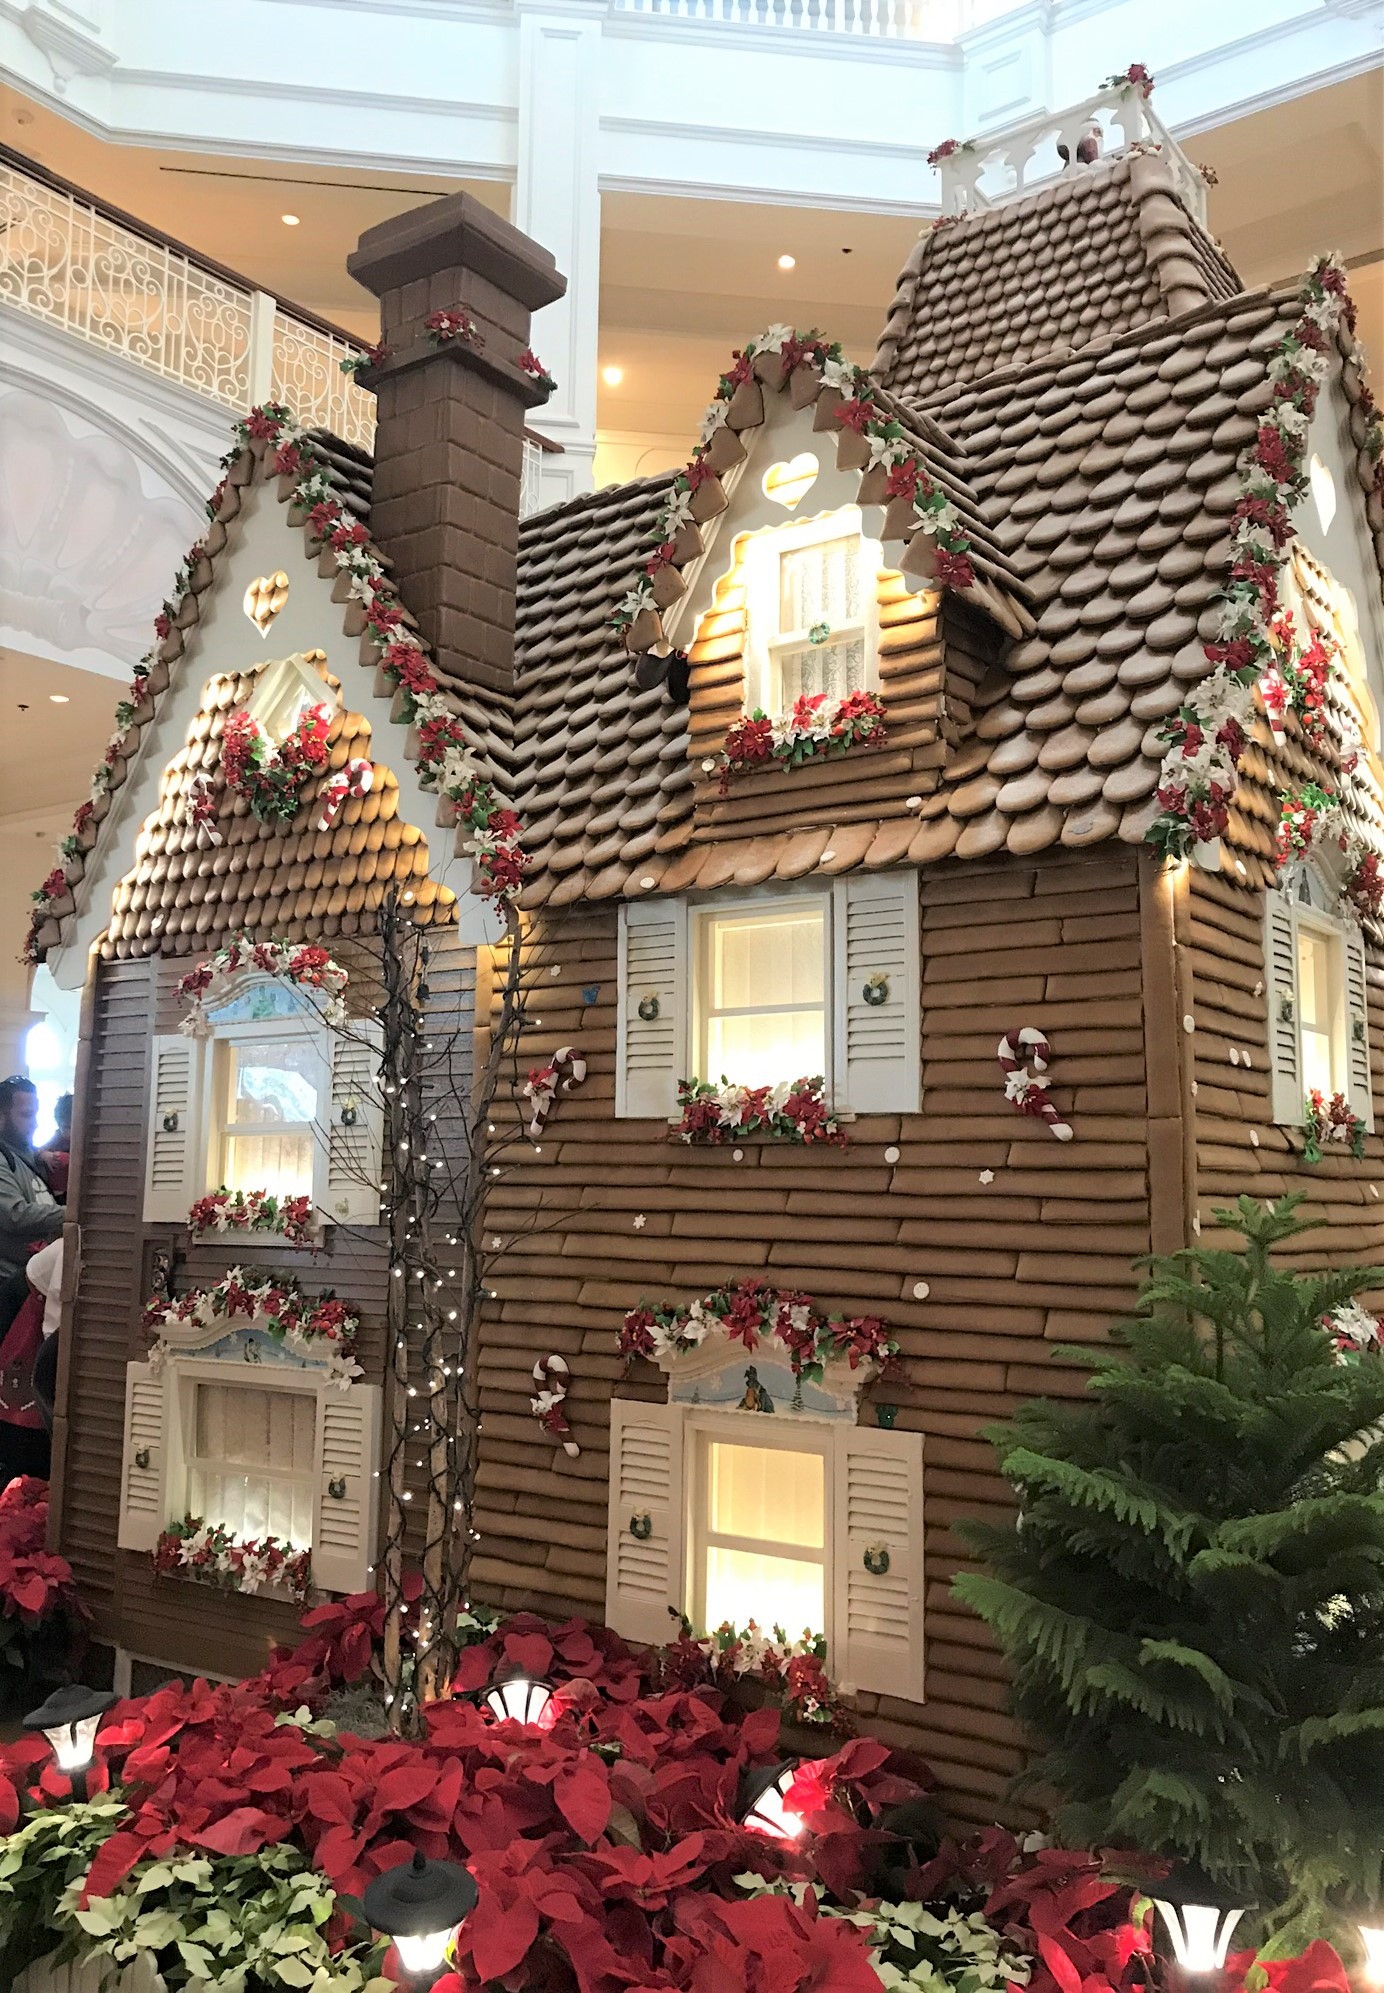 gingerbread house display